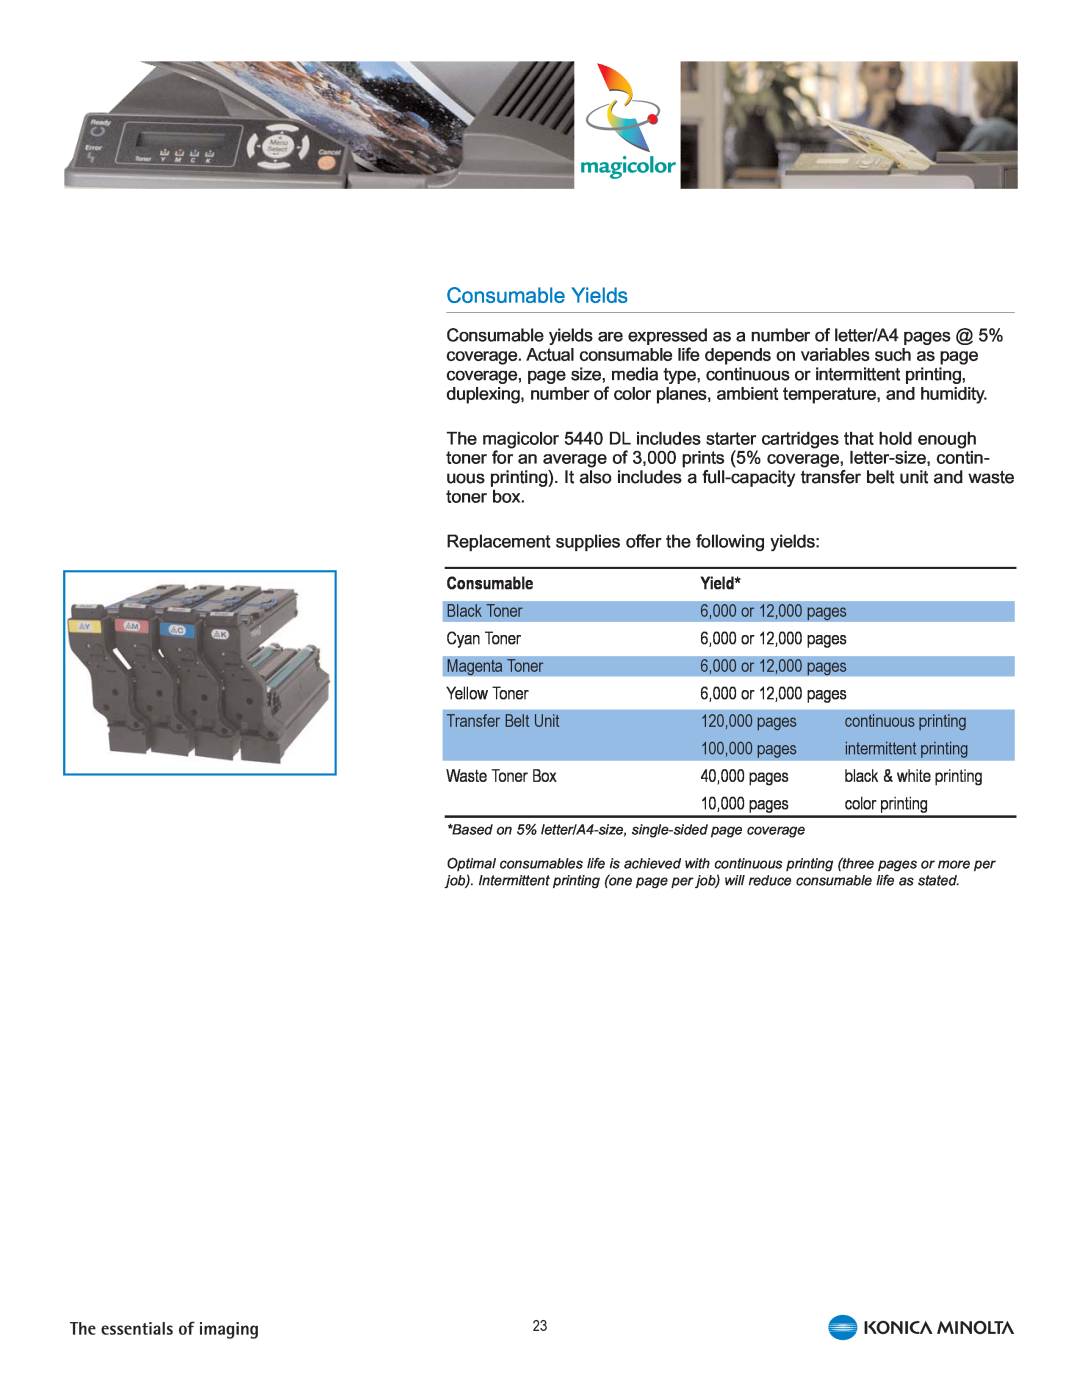 Konica Minolta 5440 DL manual Consumable Yields 